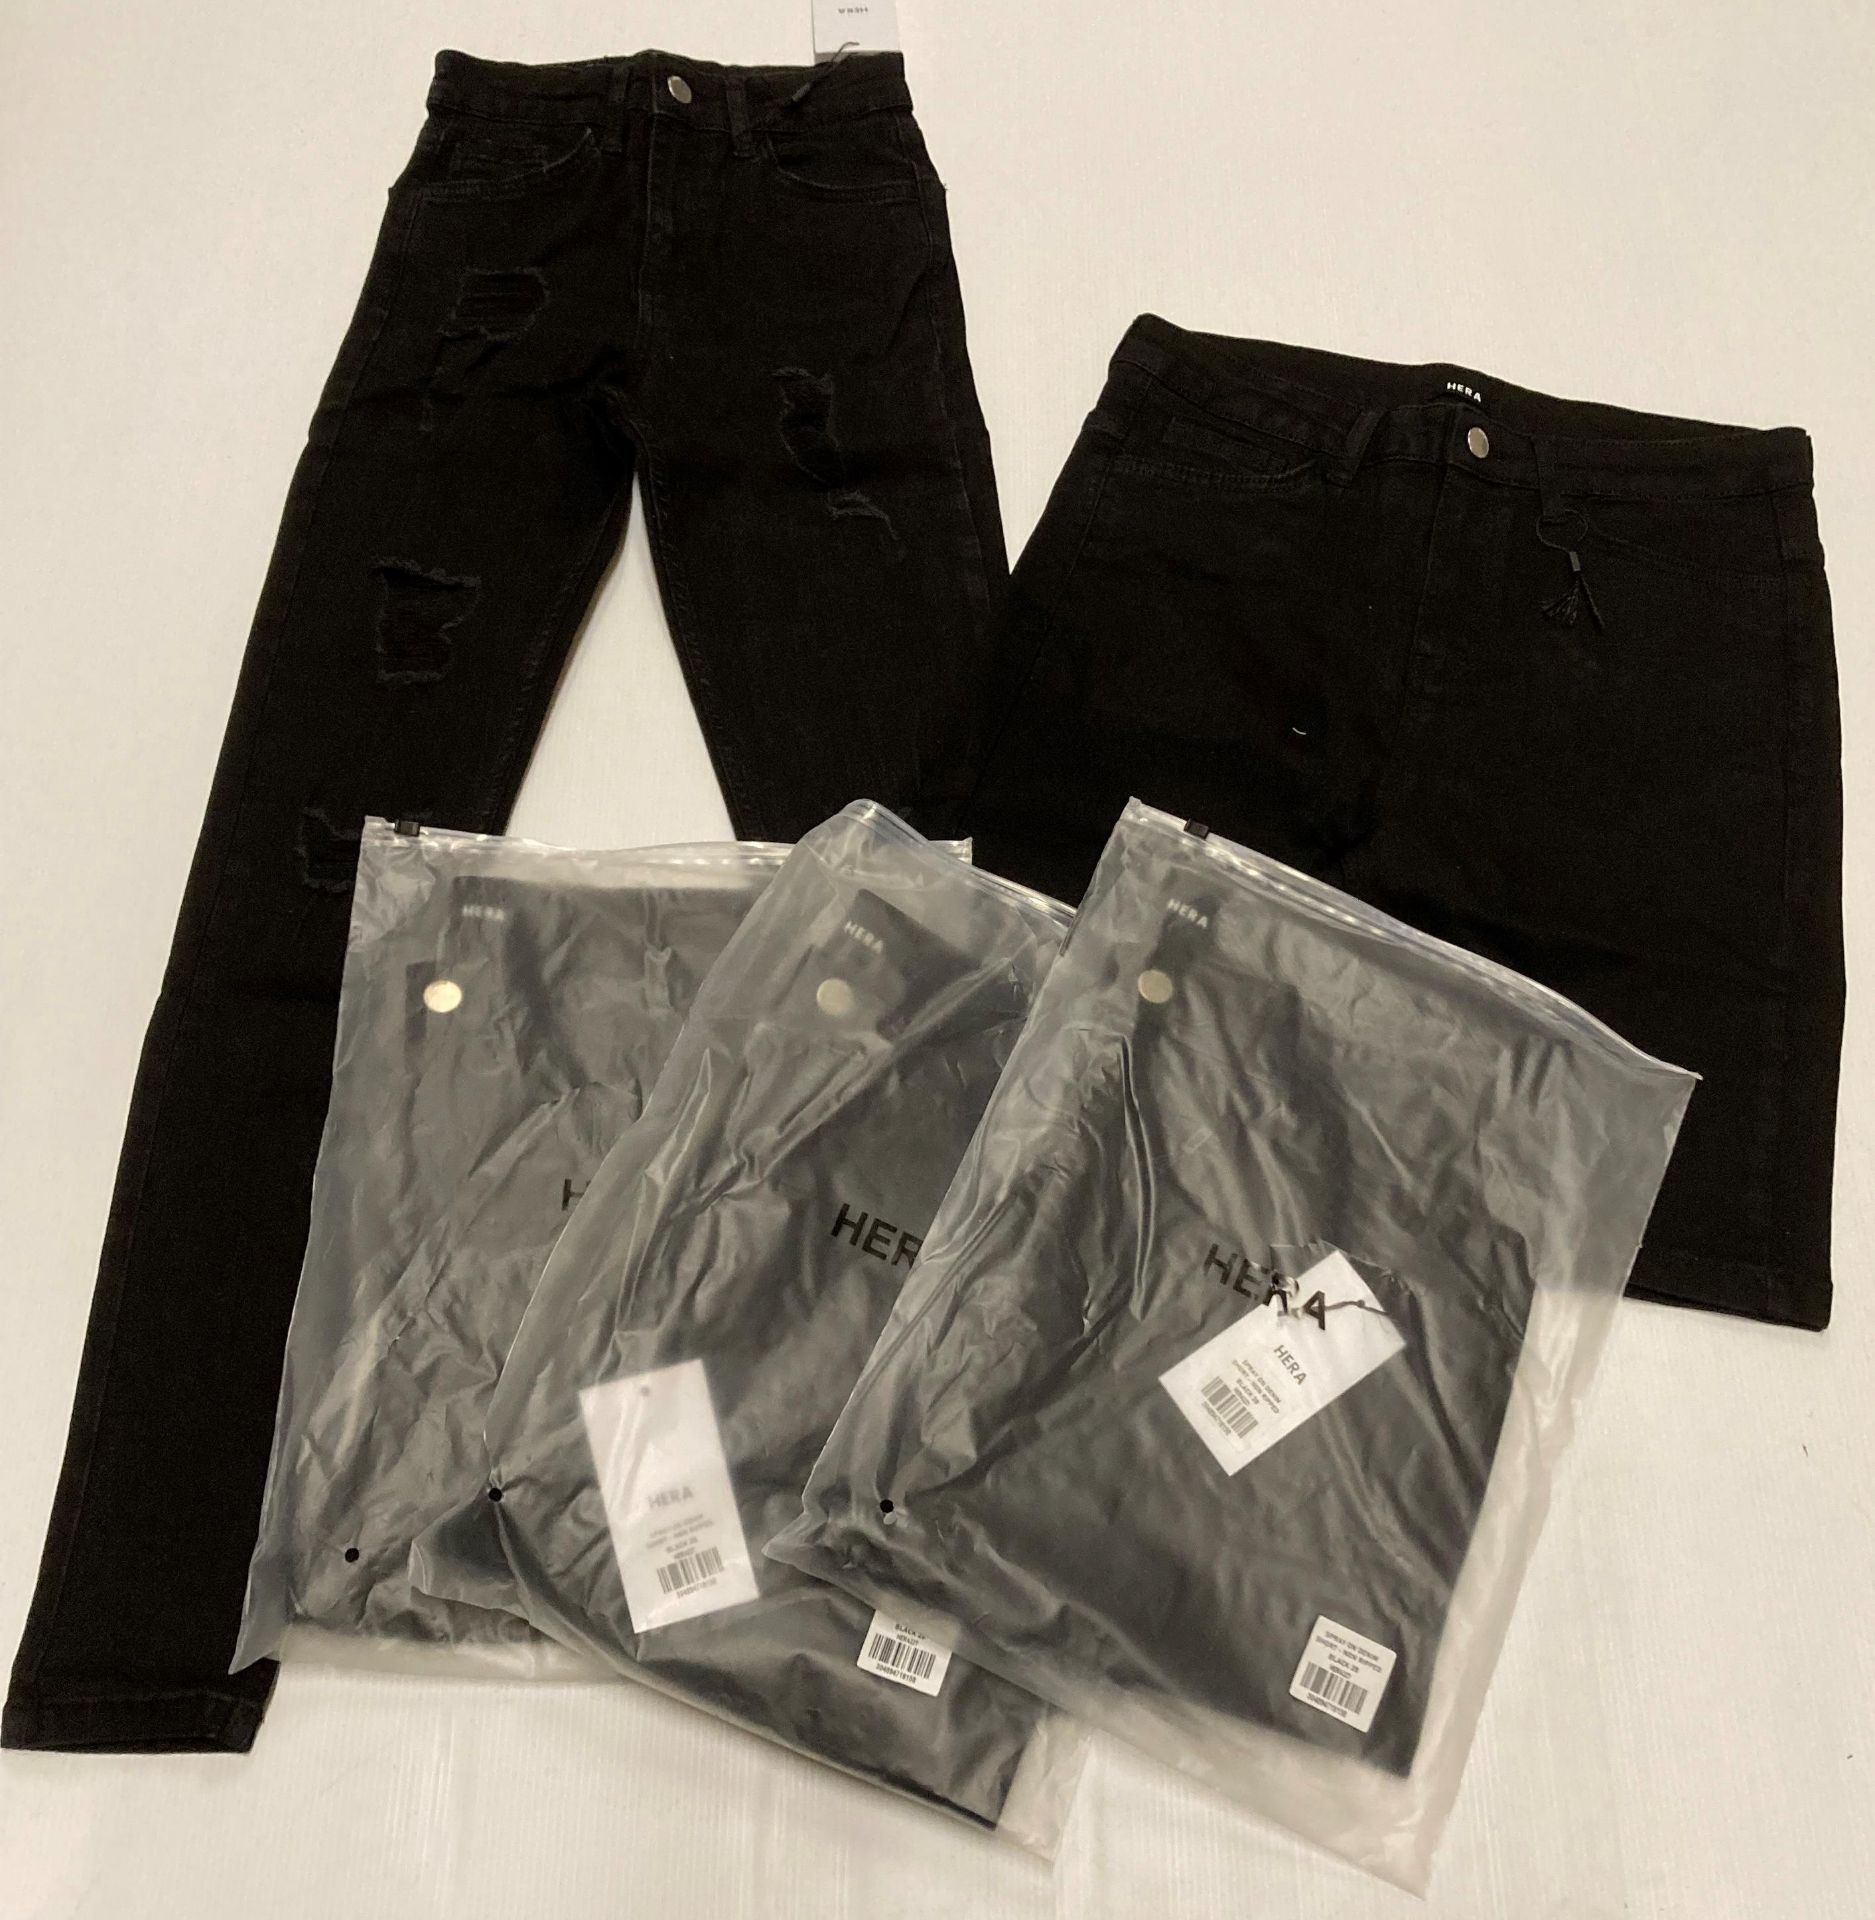 5 x items - 4 x Hera black denim shorts (size 28) and 1 x Hera ripped skinny jeans, - Image 2 of 2